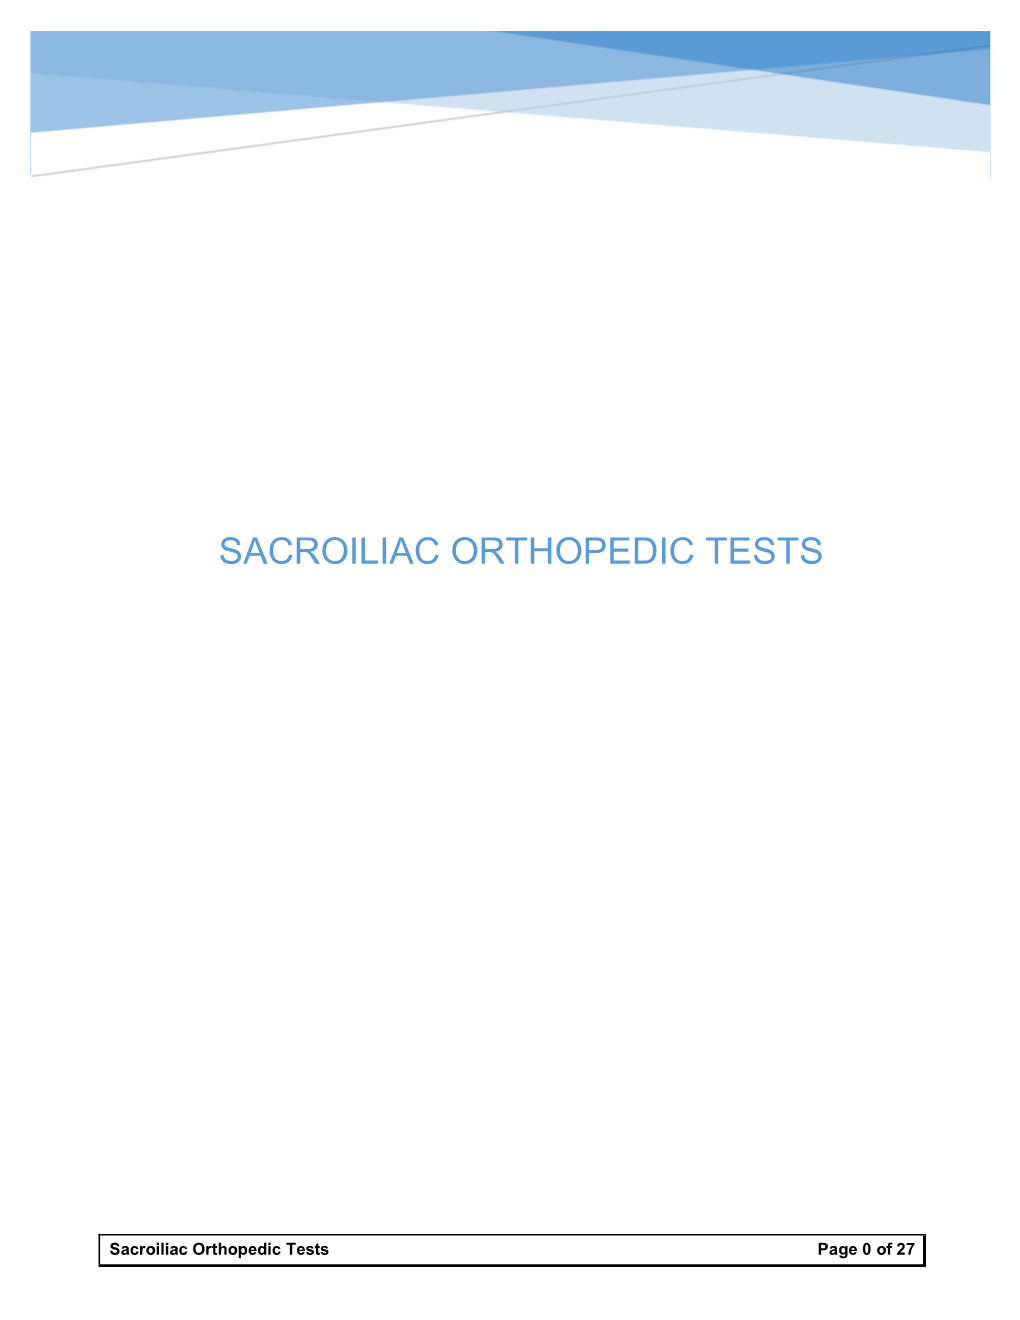 Sacroiliac Orthopedic Tests